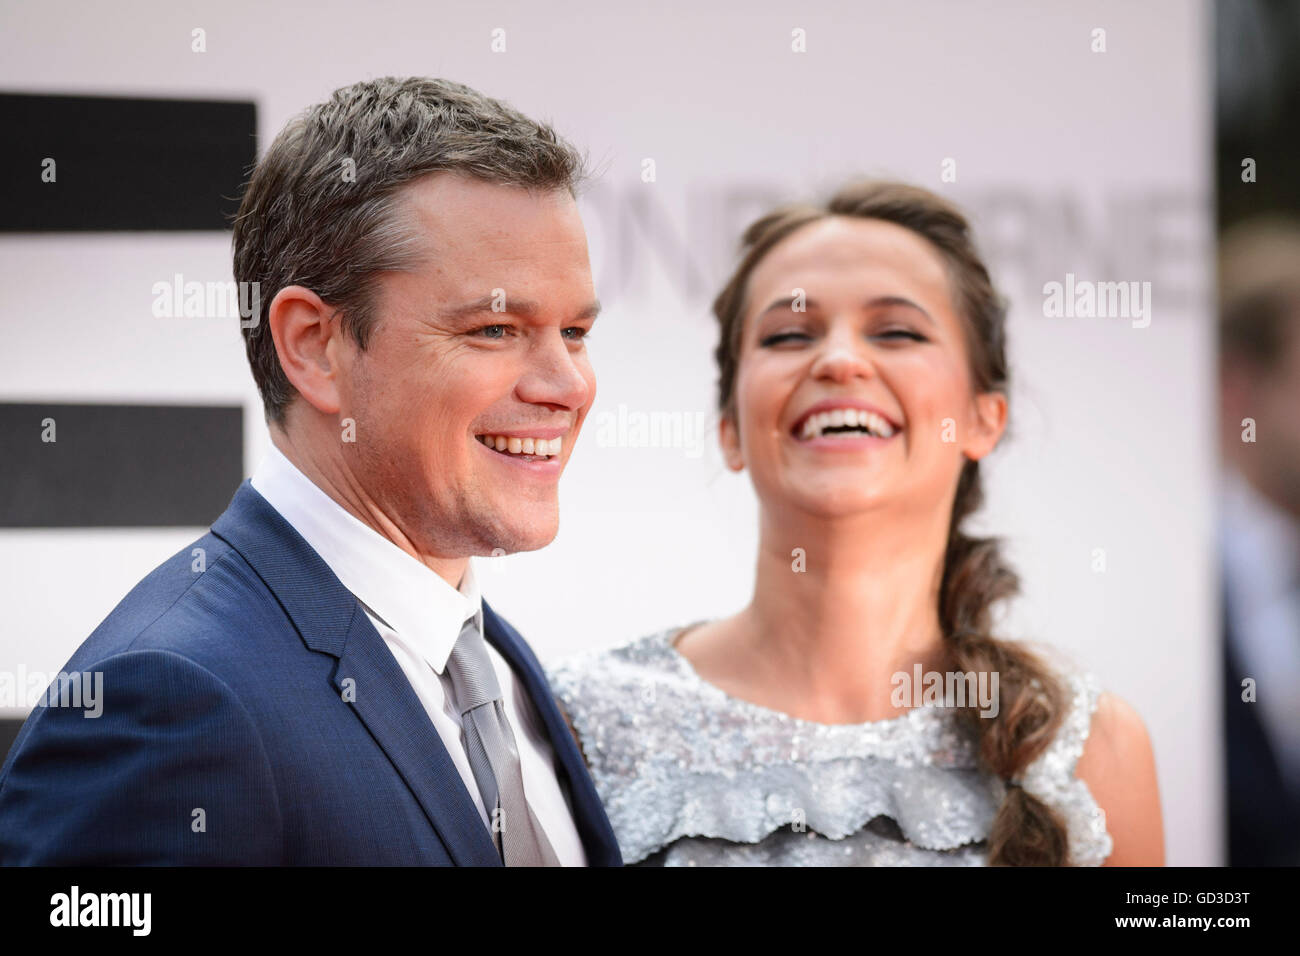 Matt Damon and Alicia Vikander attending the European premiere of Jason Bourne held at Odeon Cinema in Leicester Square, London. Stock Photo